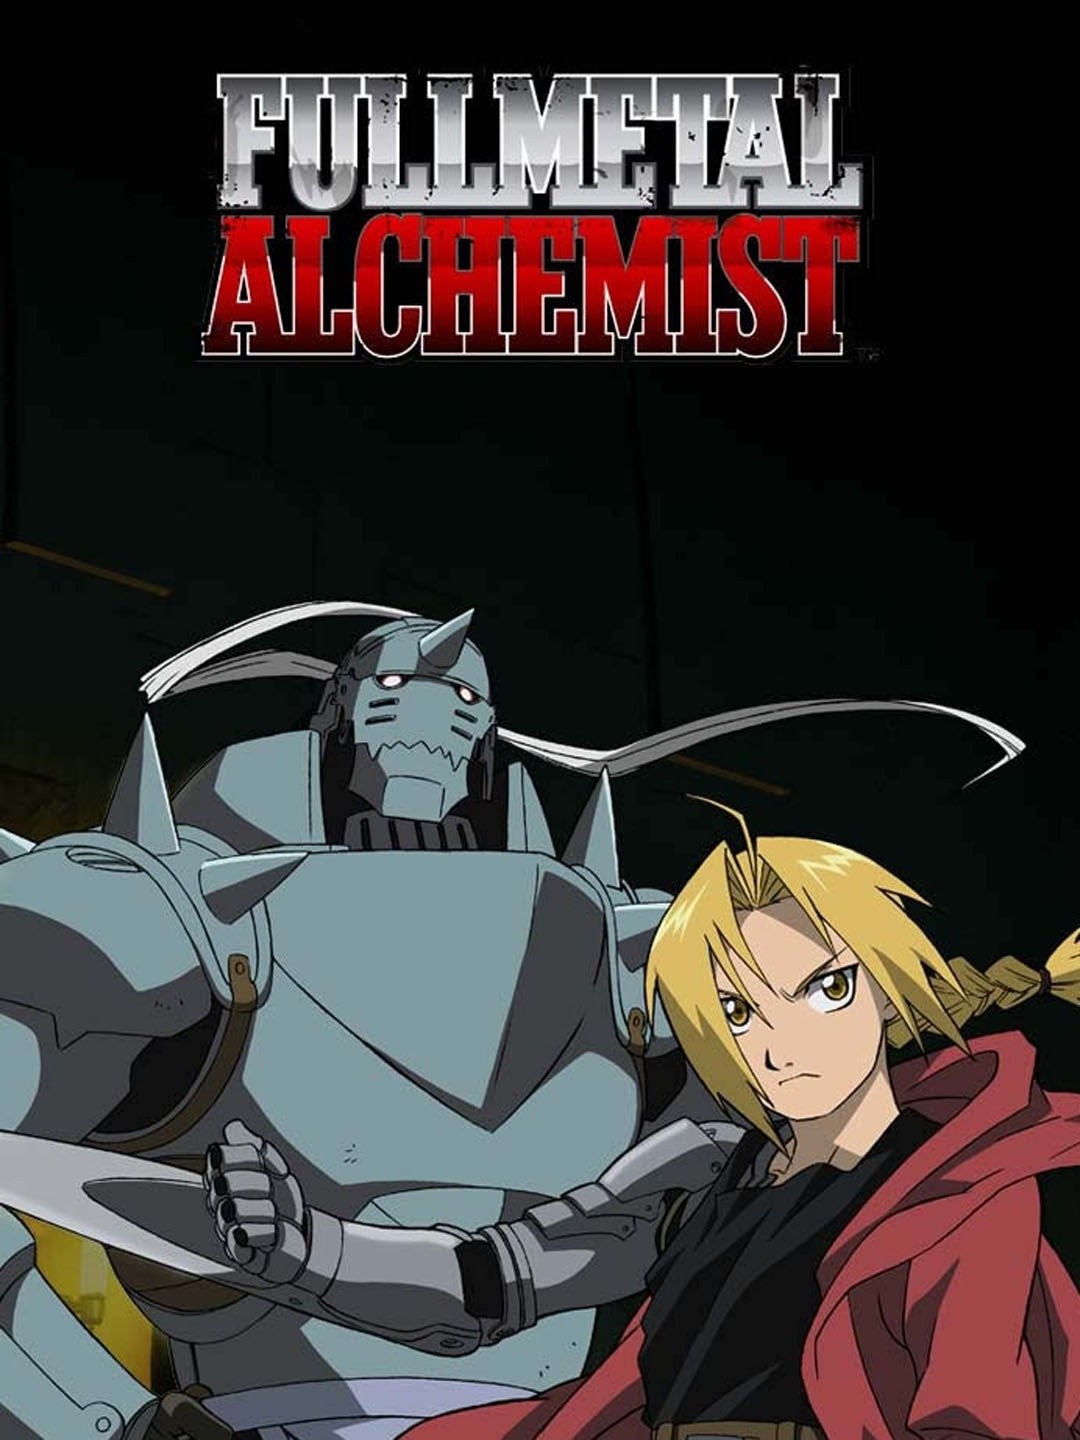 TV Time - Fullmetal Alchemist (TVShow Time)